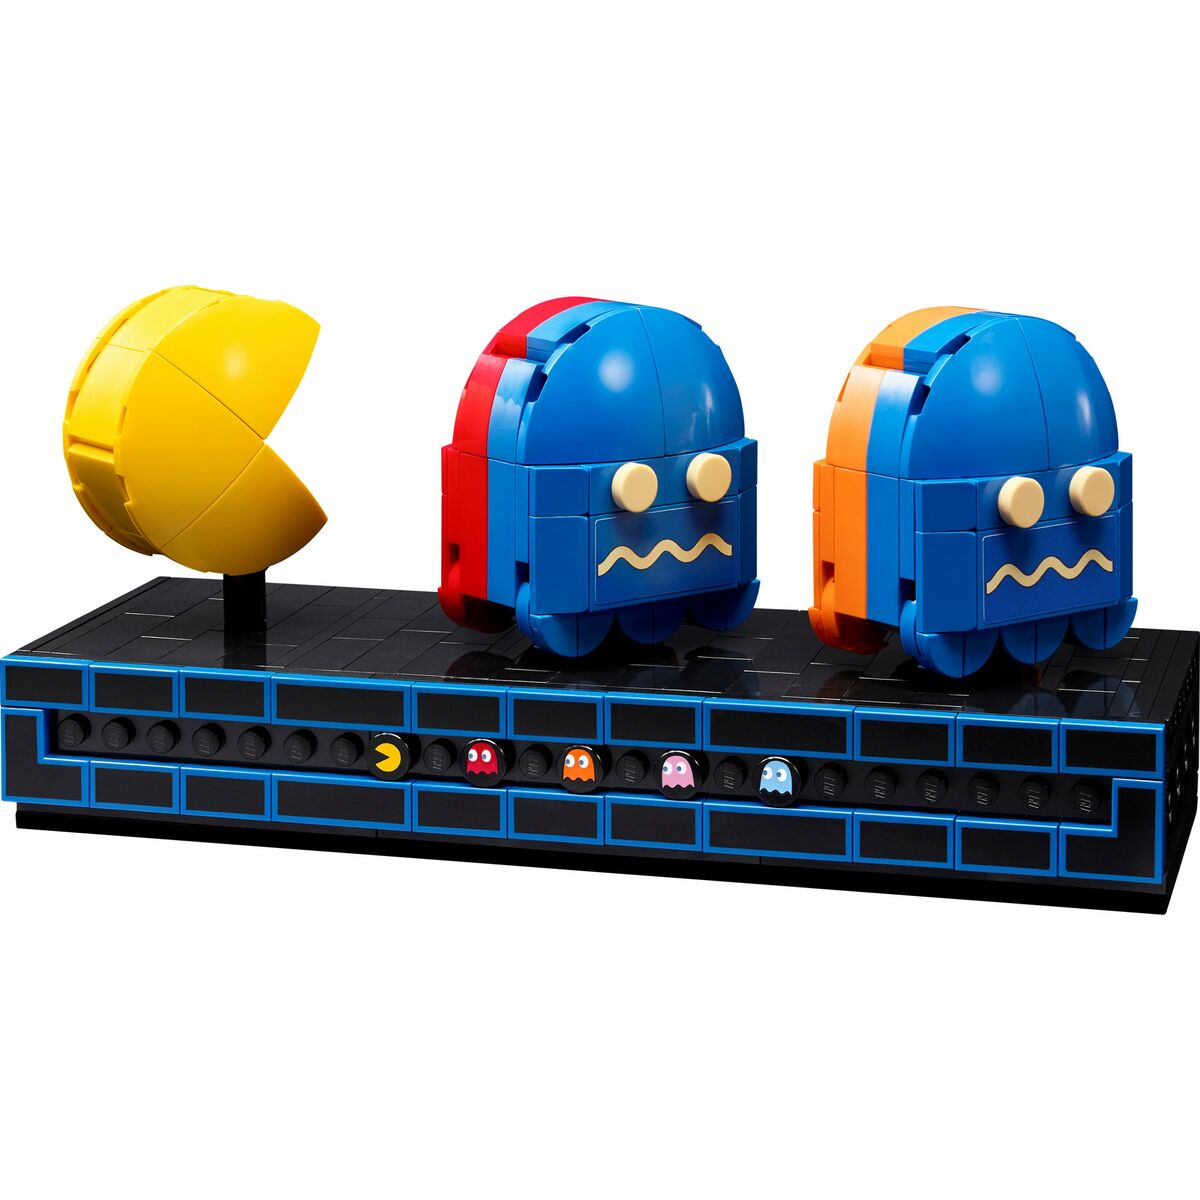 Playset Lego 10323 Pac-Man - Disponibile in 3-4 giorni lavorativi